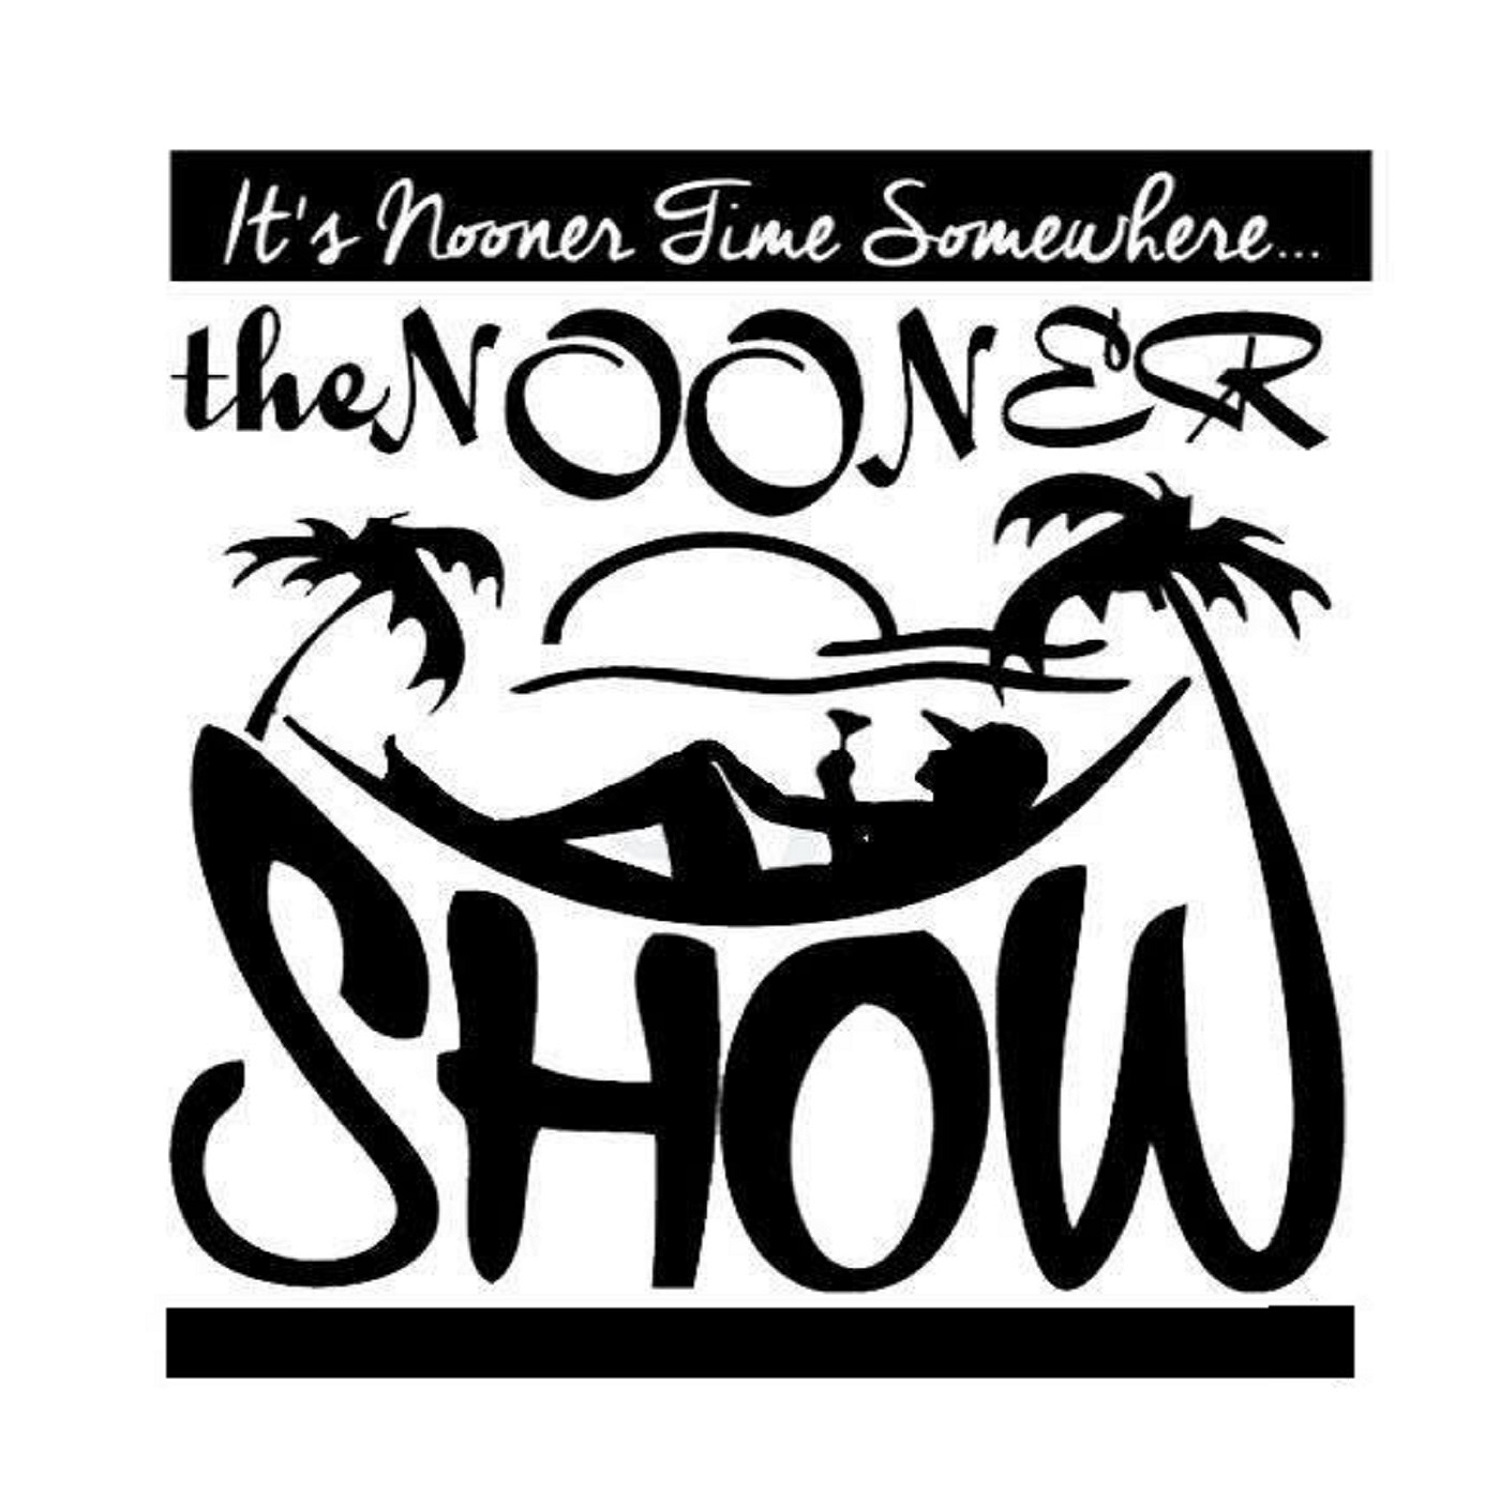 The Nooner Show – Episode 182